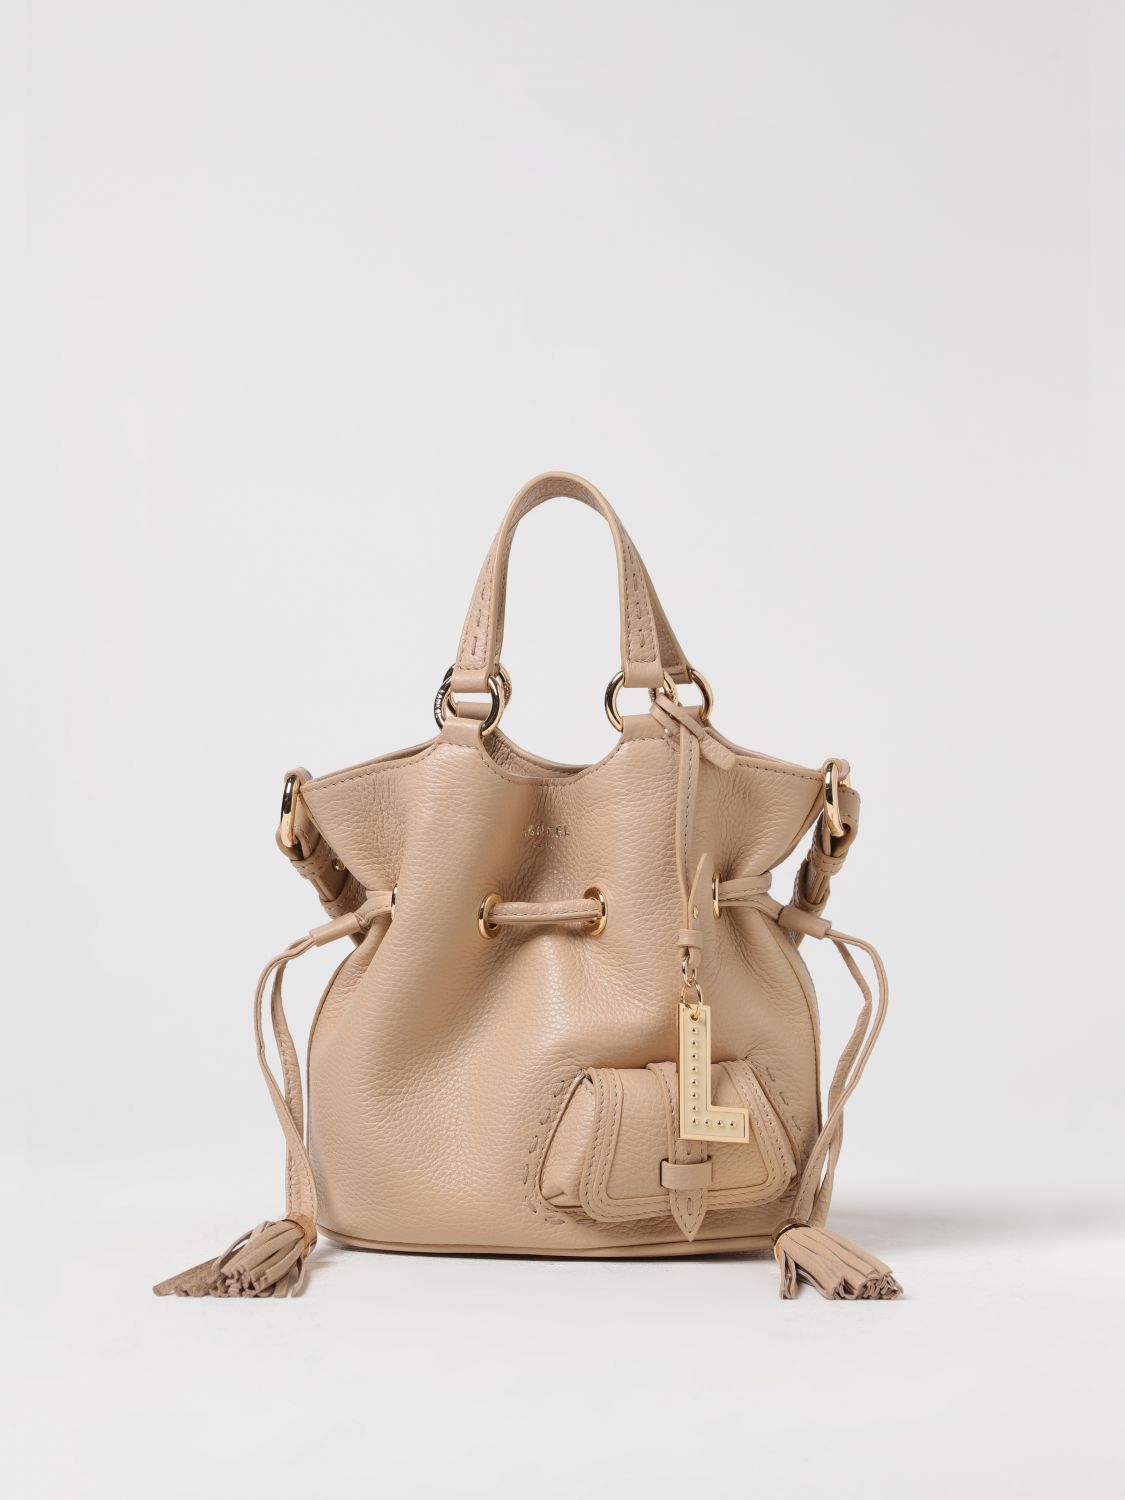 Lancel Mini Bag  Woman Color Brown